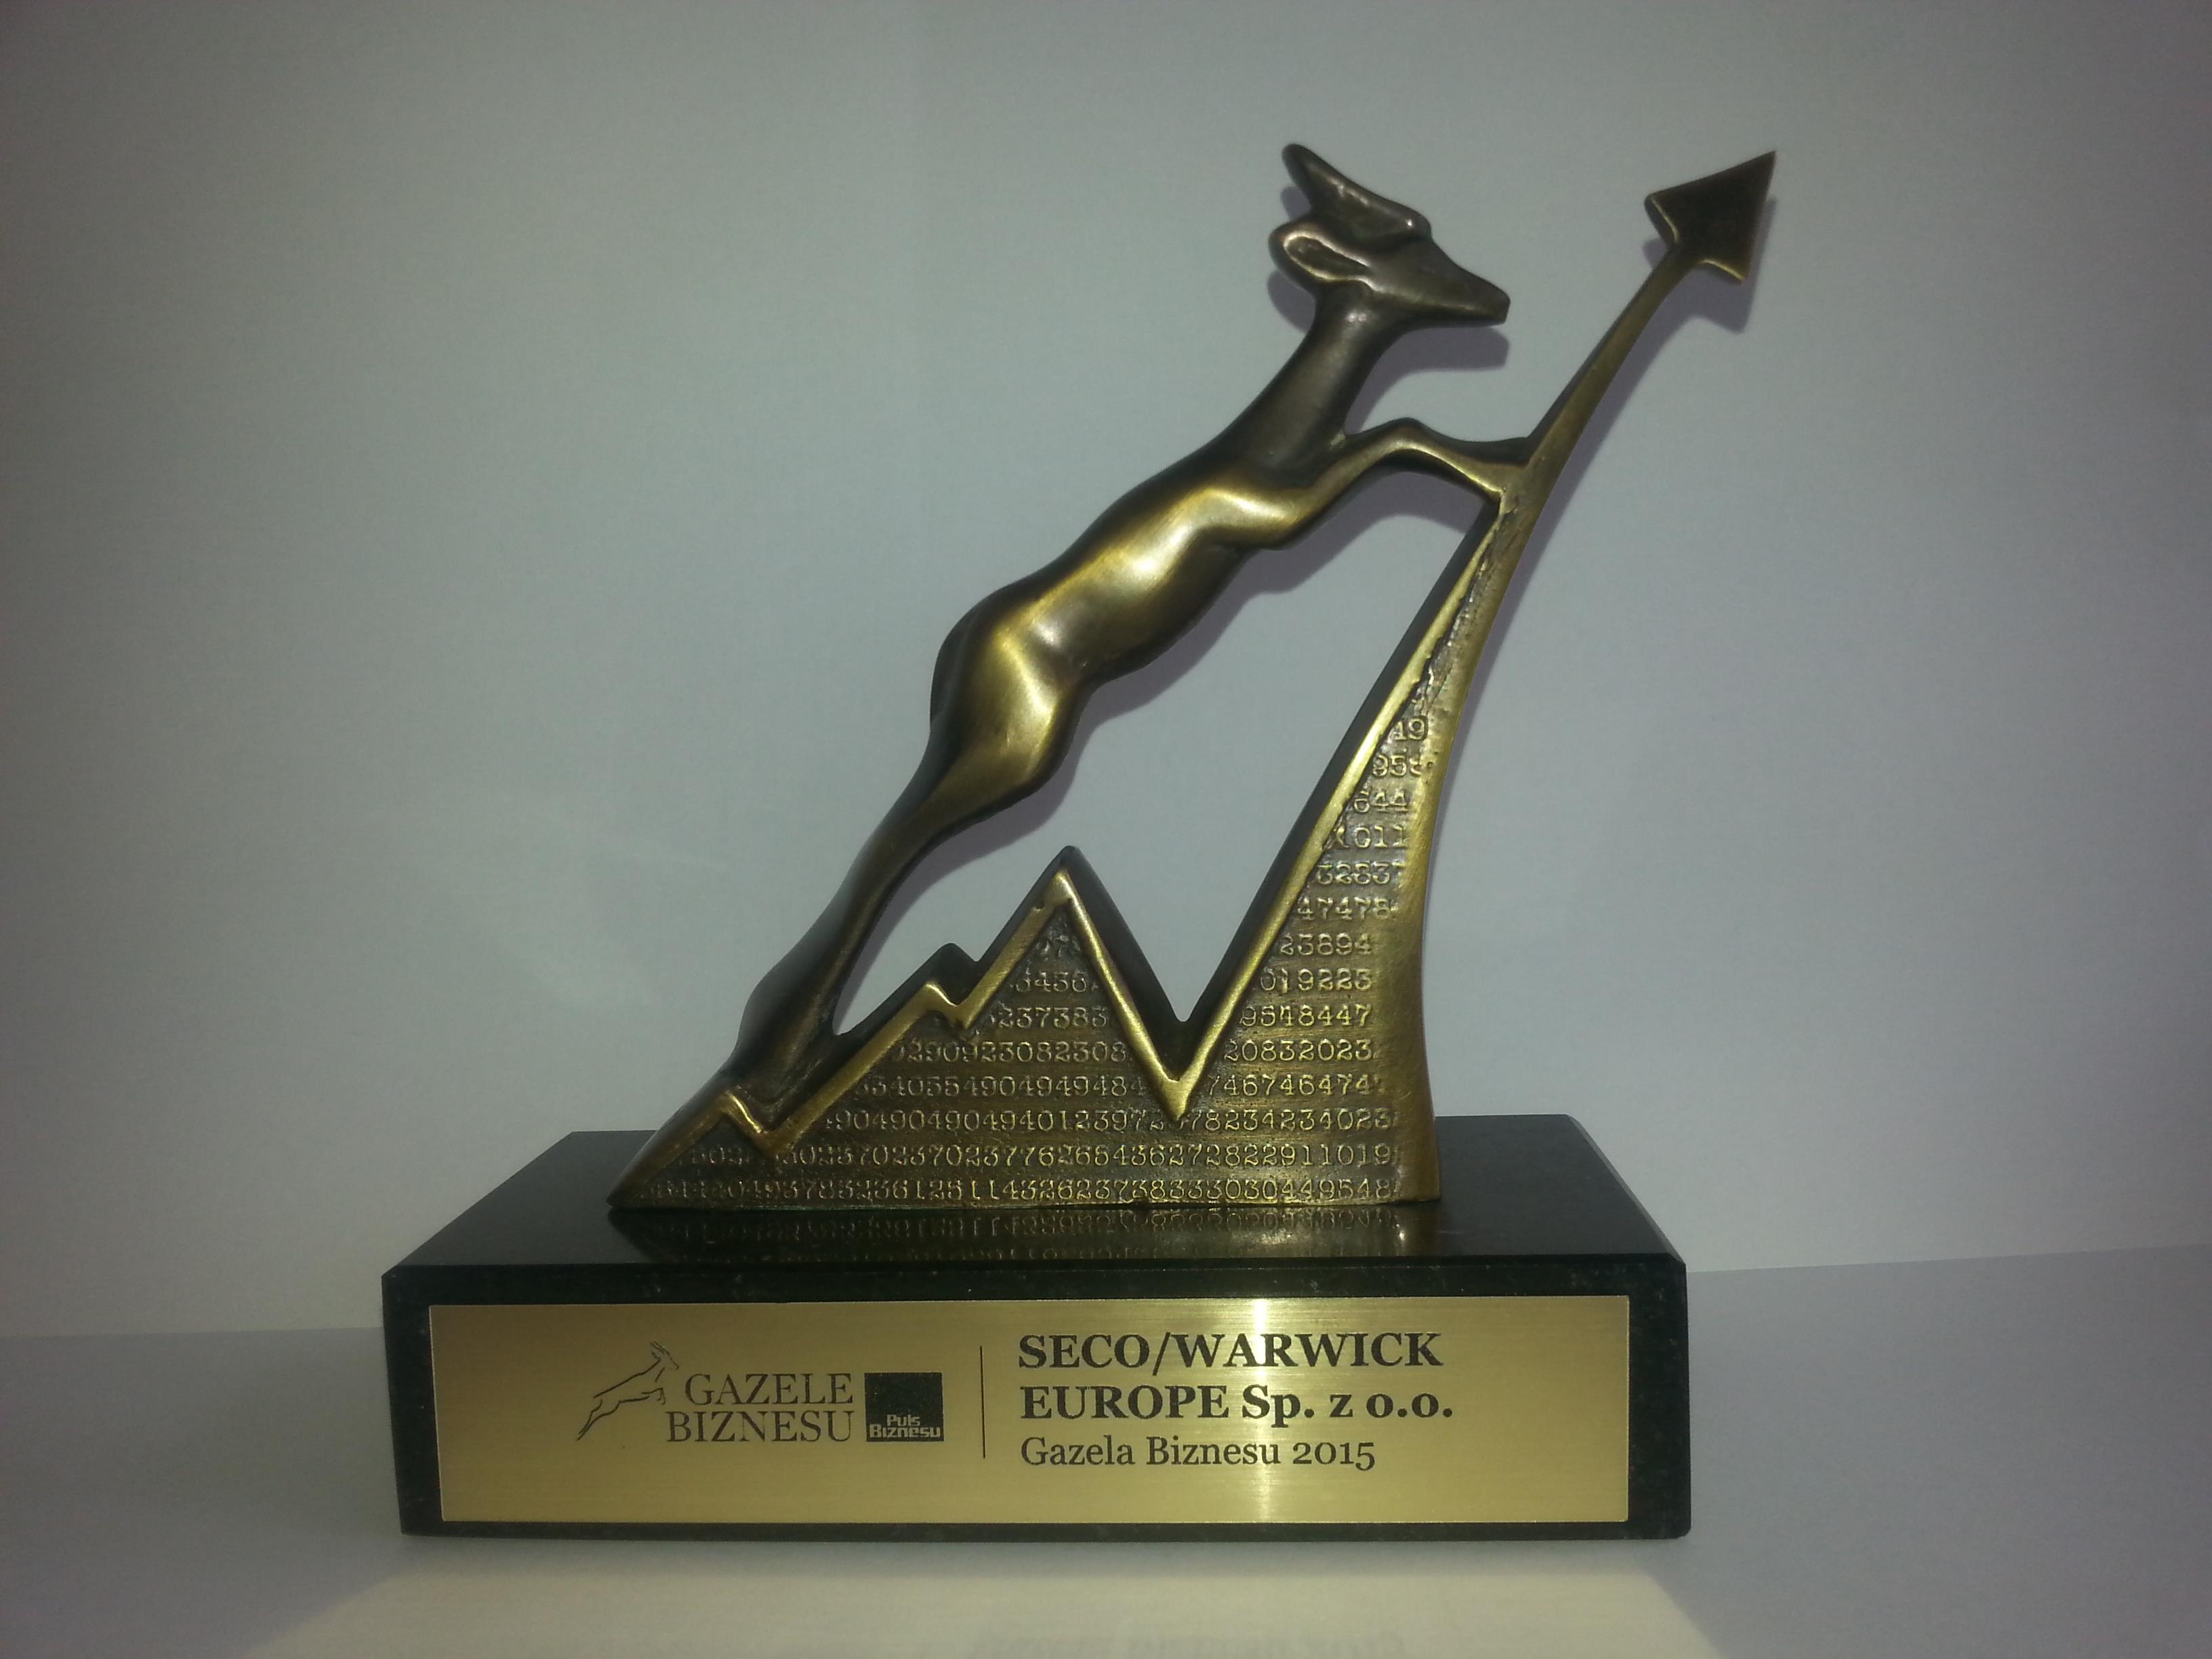 SECOWARWICK wins „The Gazelles of Business” again